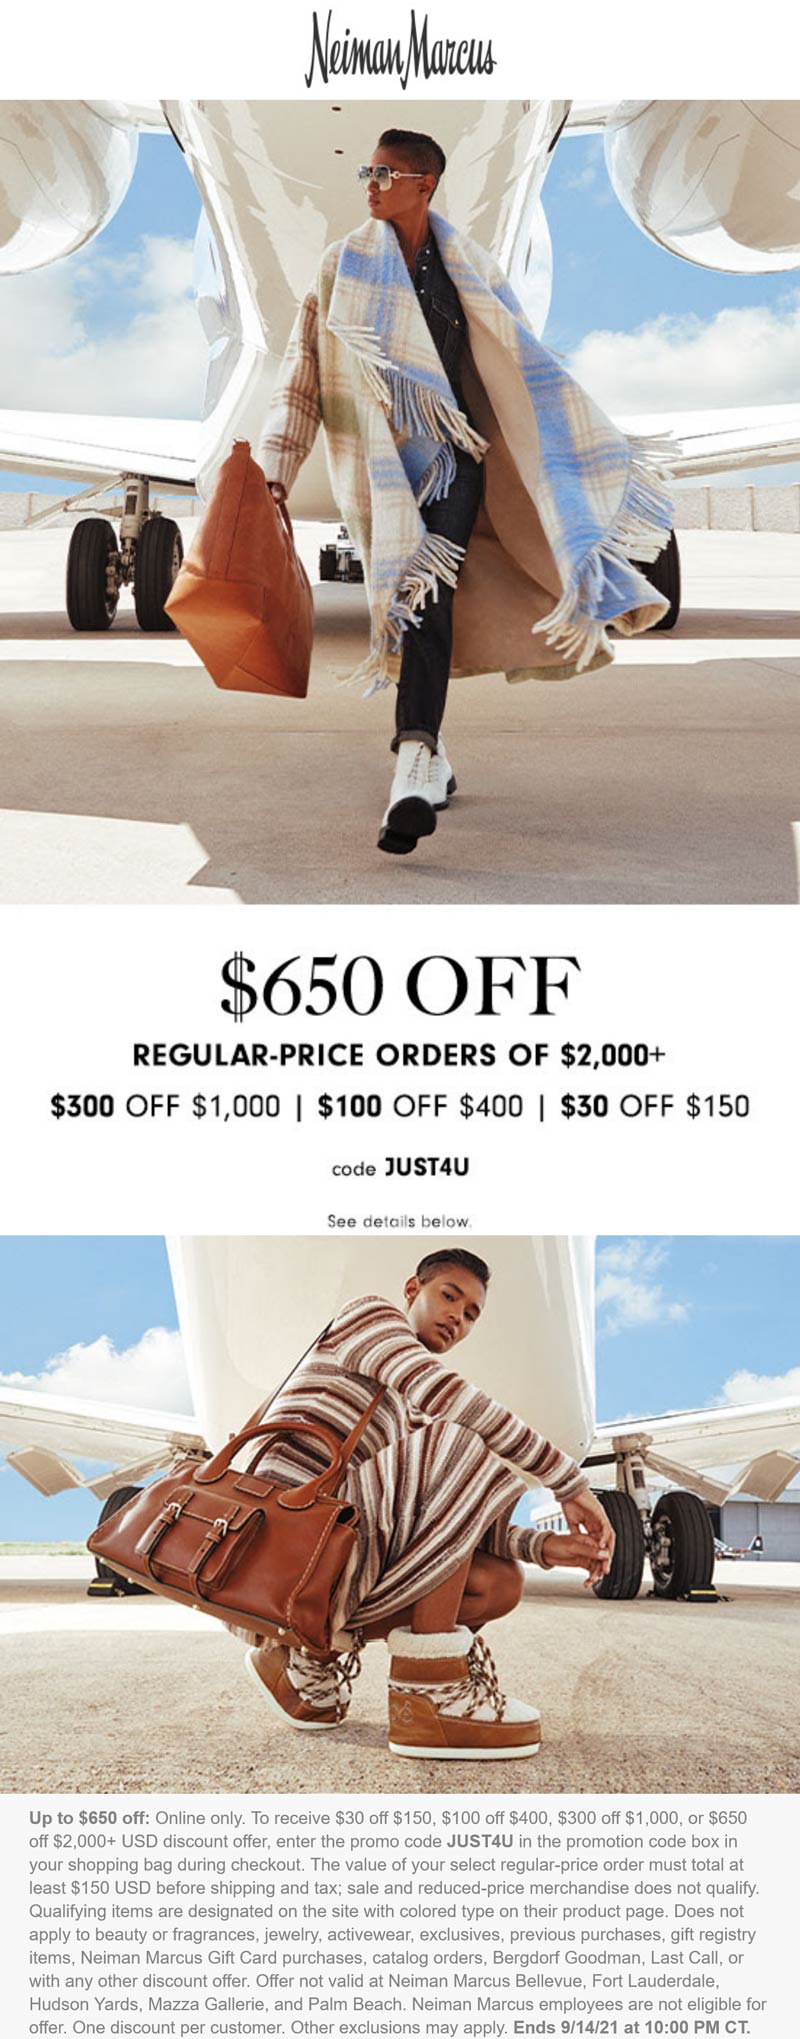 Neiman Marcus stores Coupon  $30-$650 off $150+ today at Neiman Marcus via promo code JUST4U #neimanmarcus 